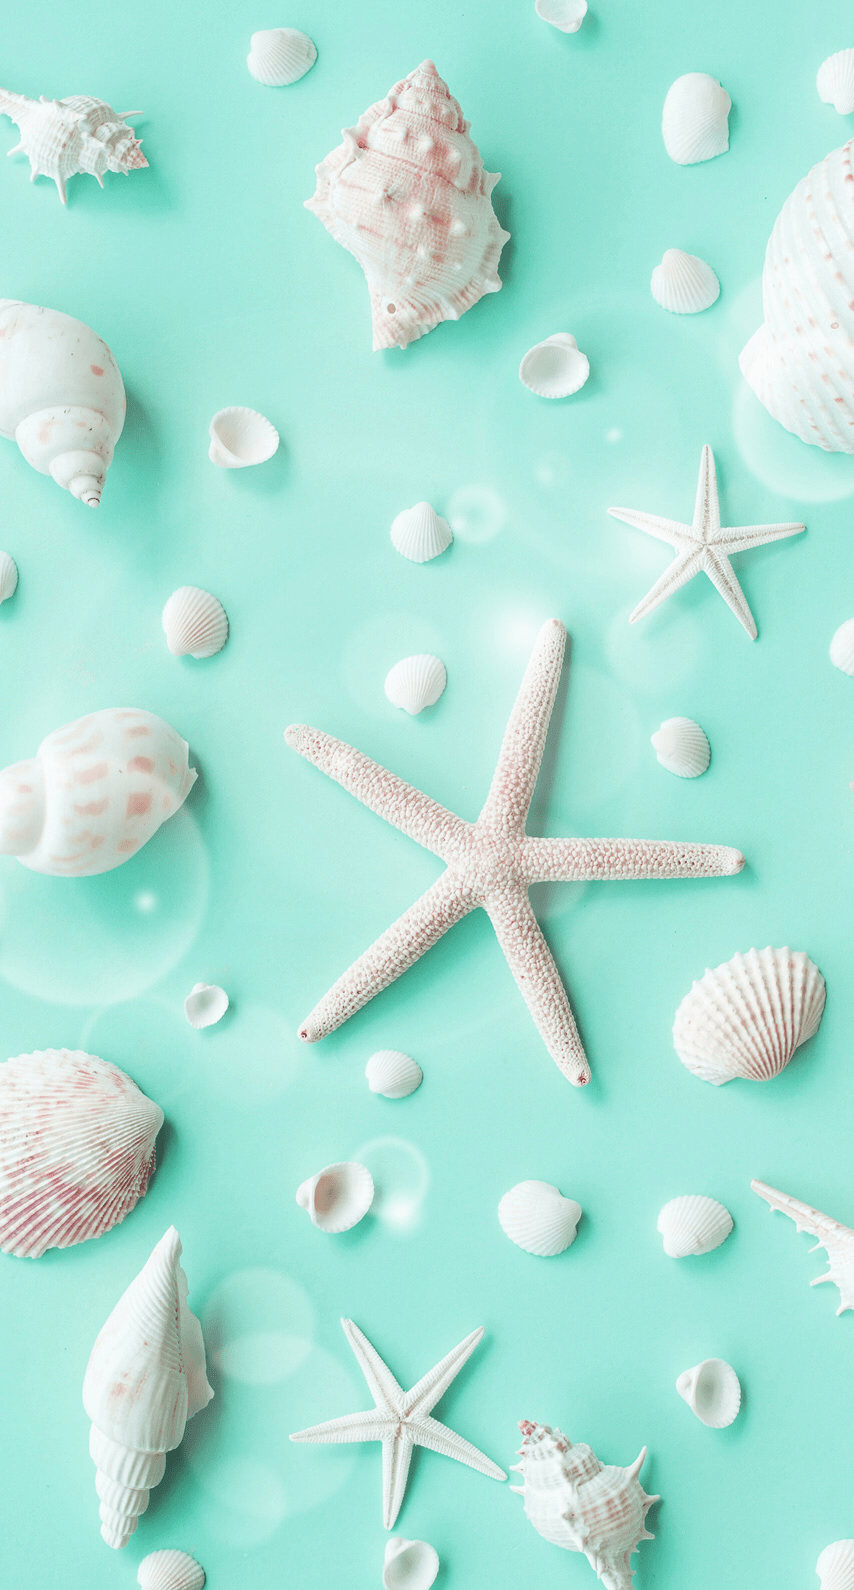 A seashell pattern on turquoise background - Starfish